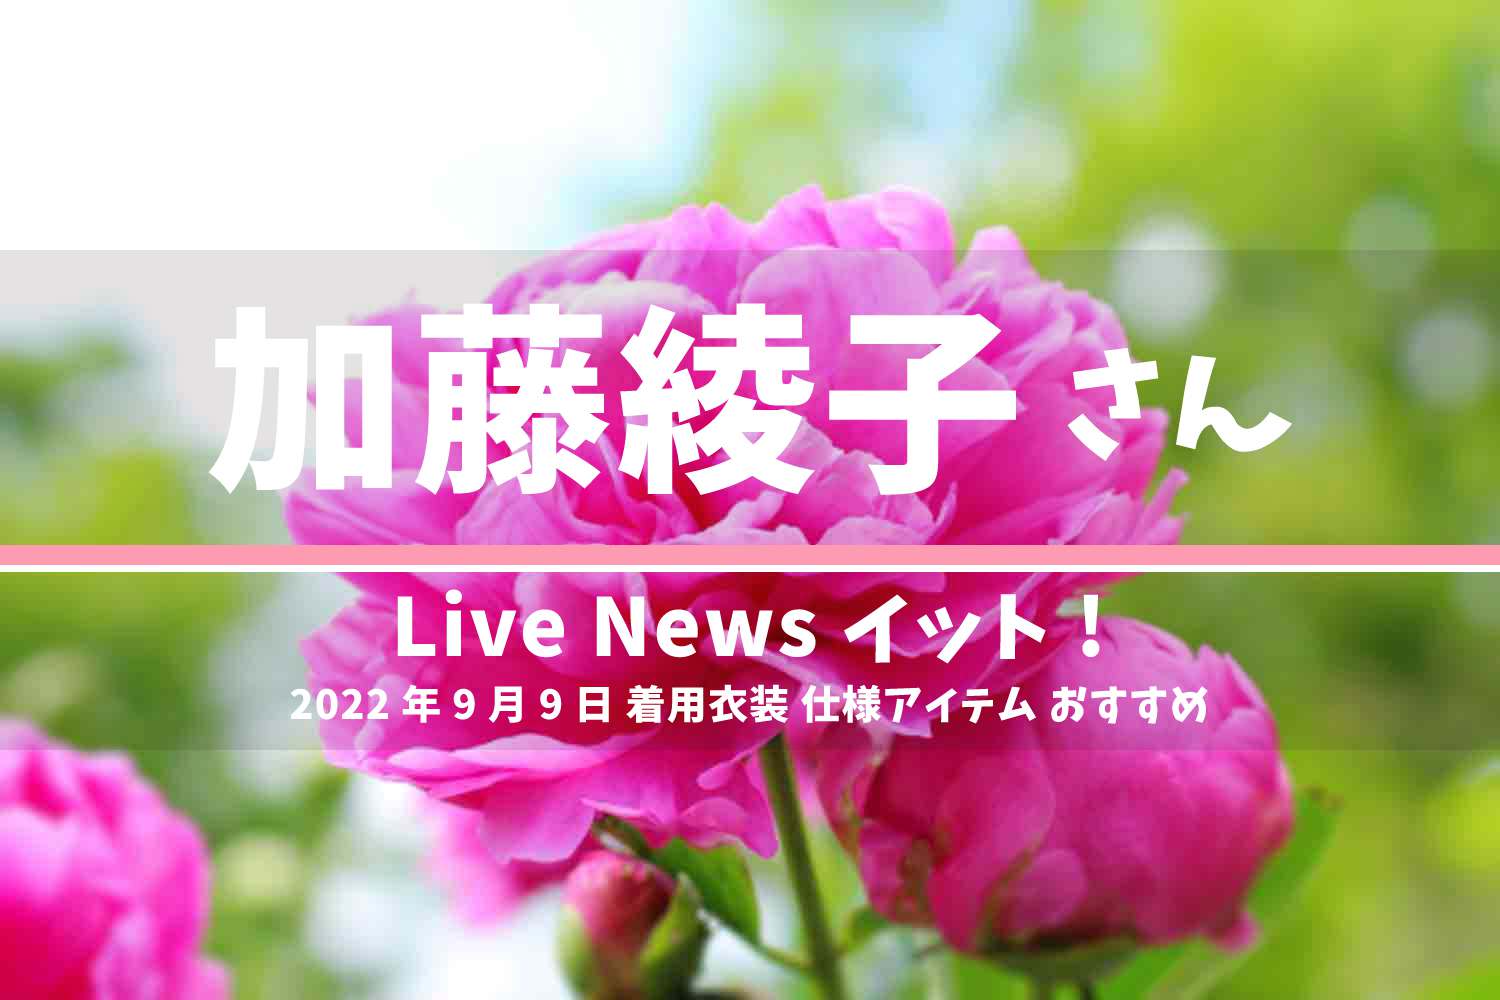 Live News イット! 加藤綾子さん 番組 衣装 2022年9月9日放送